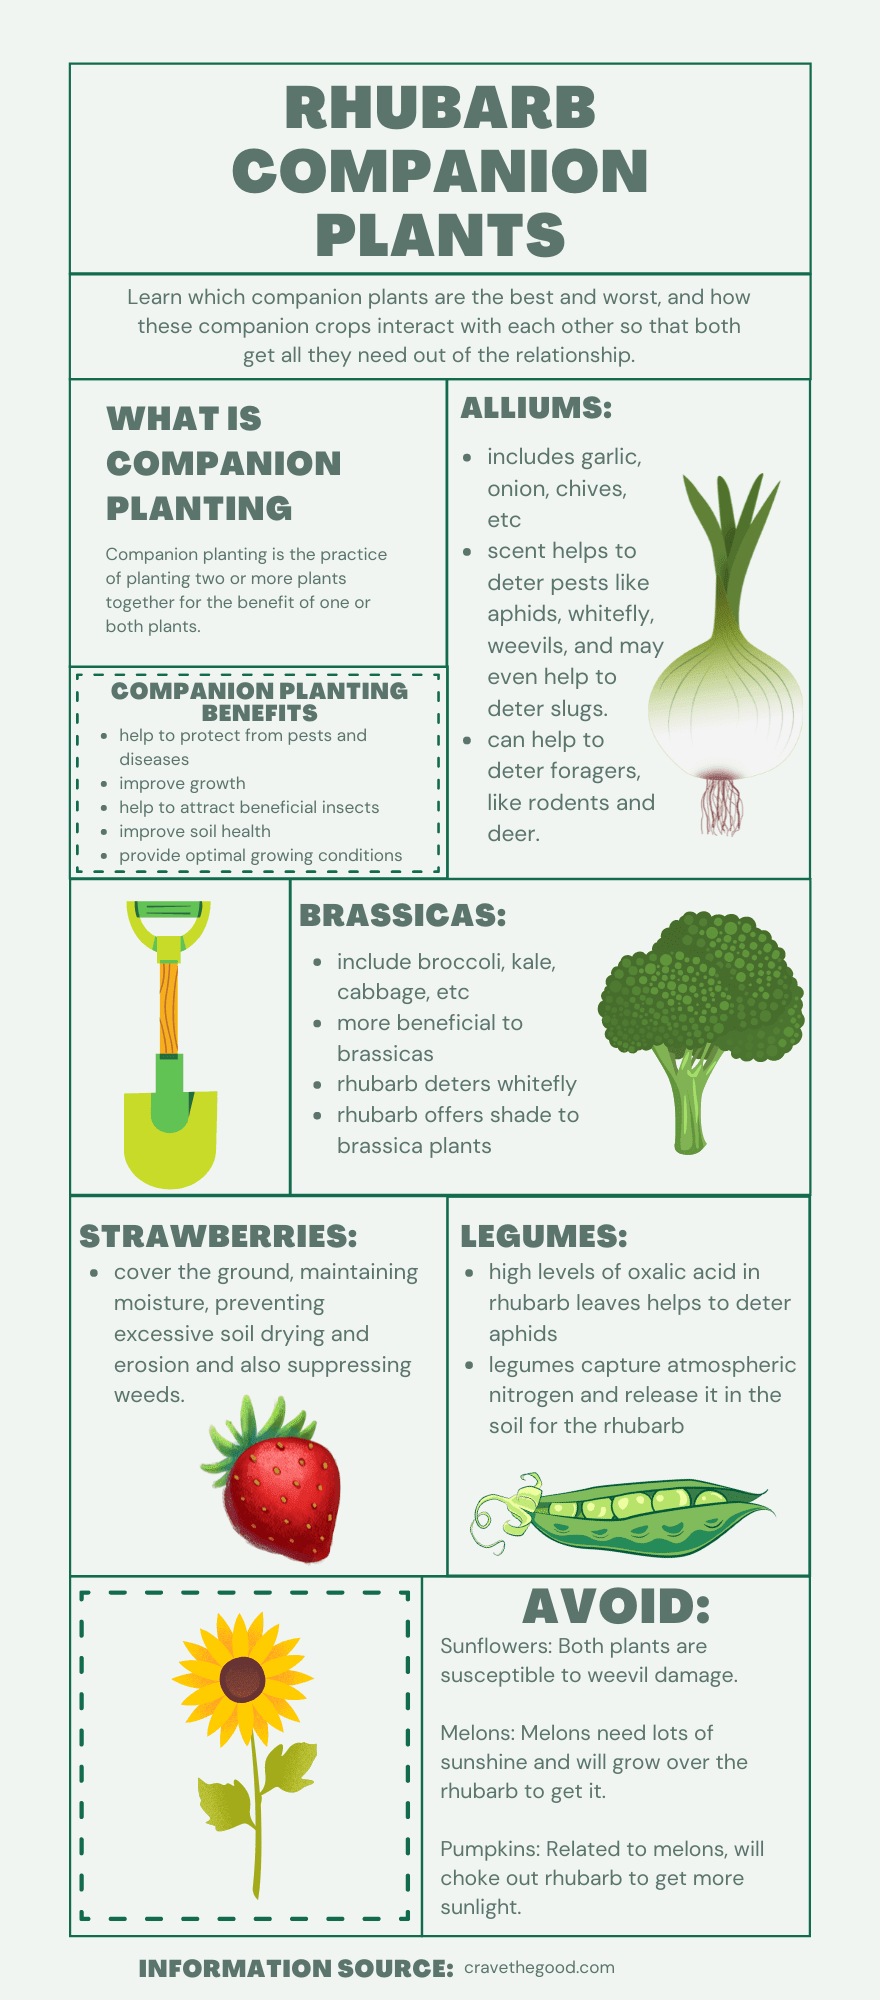 Rhubarb companion plants infographic. 